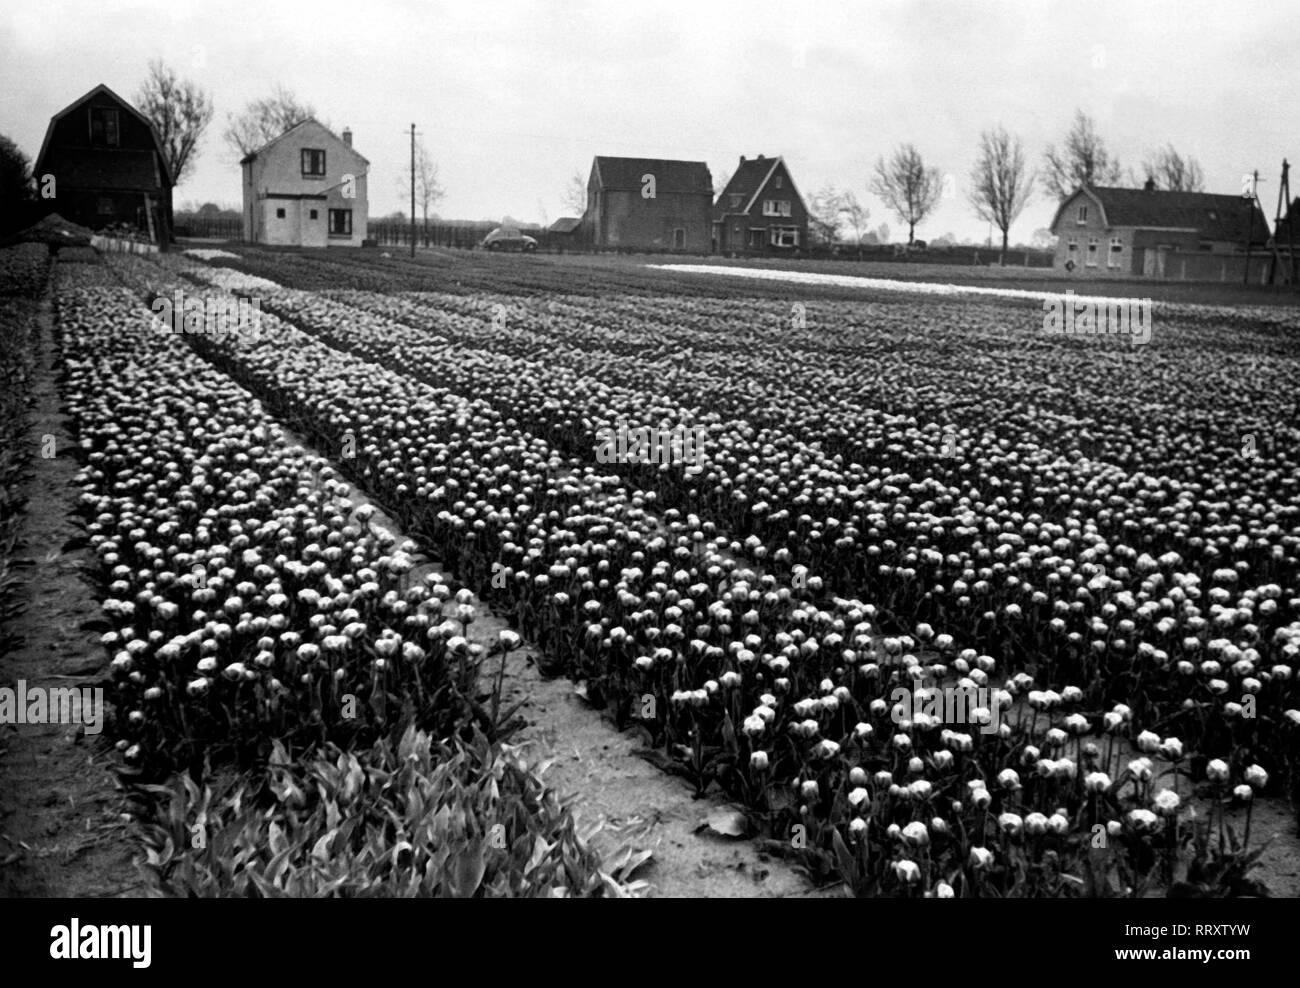 Travel to Holland - Holland, part of the Netherlands - tulip fields. Tulpenfelder in der Provinz Holland, Niederlande. Image date circa 1956. Photo Erich Andres Stock Photo